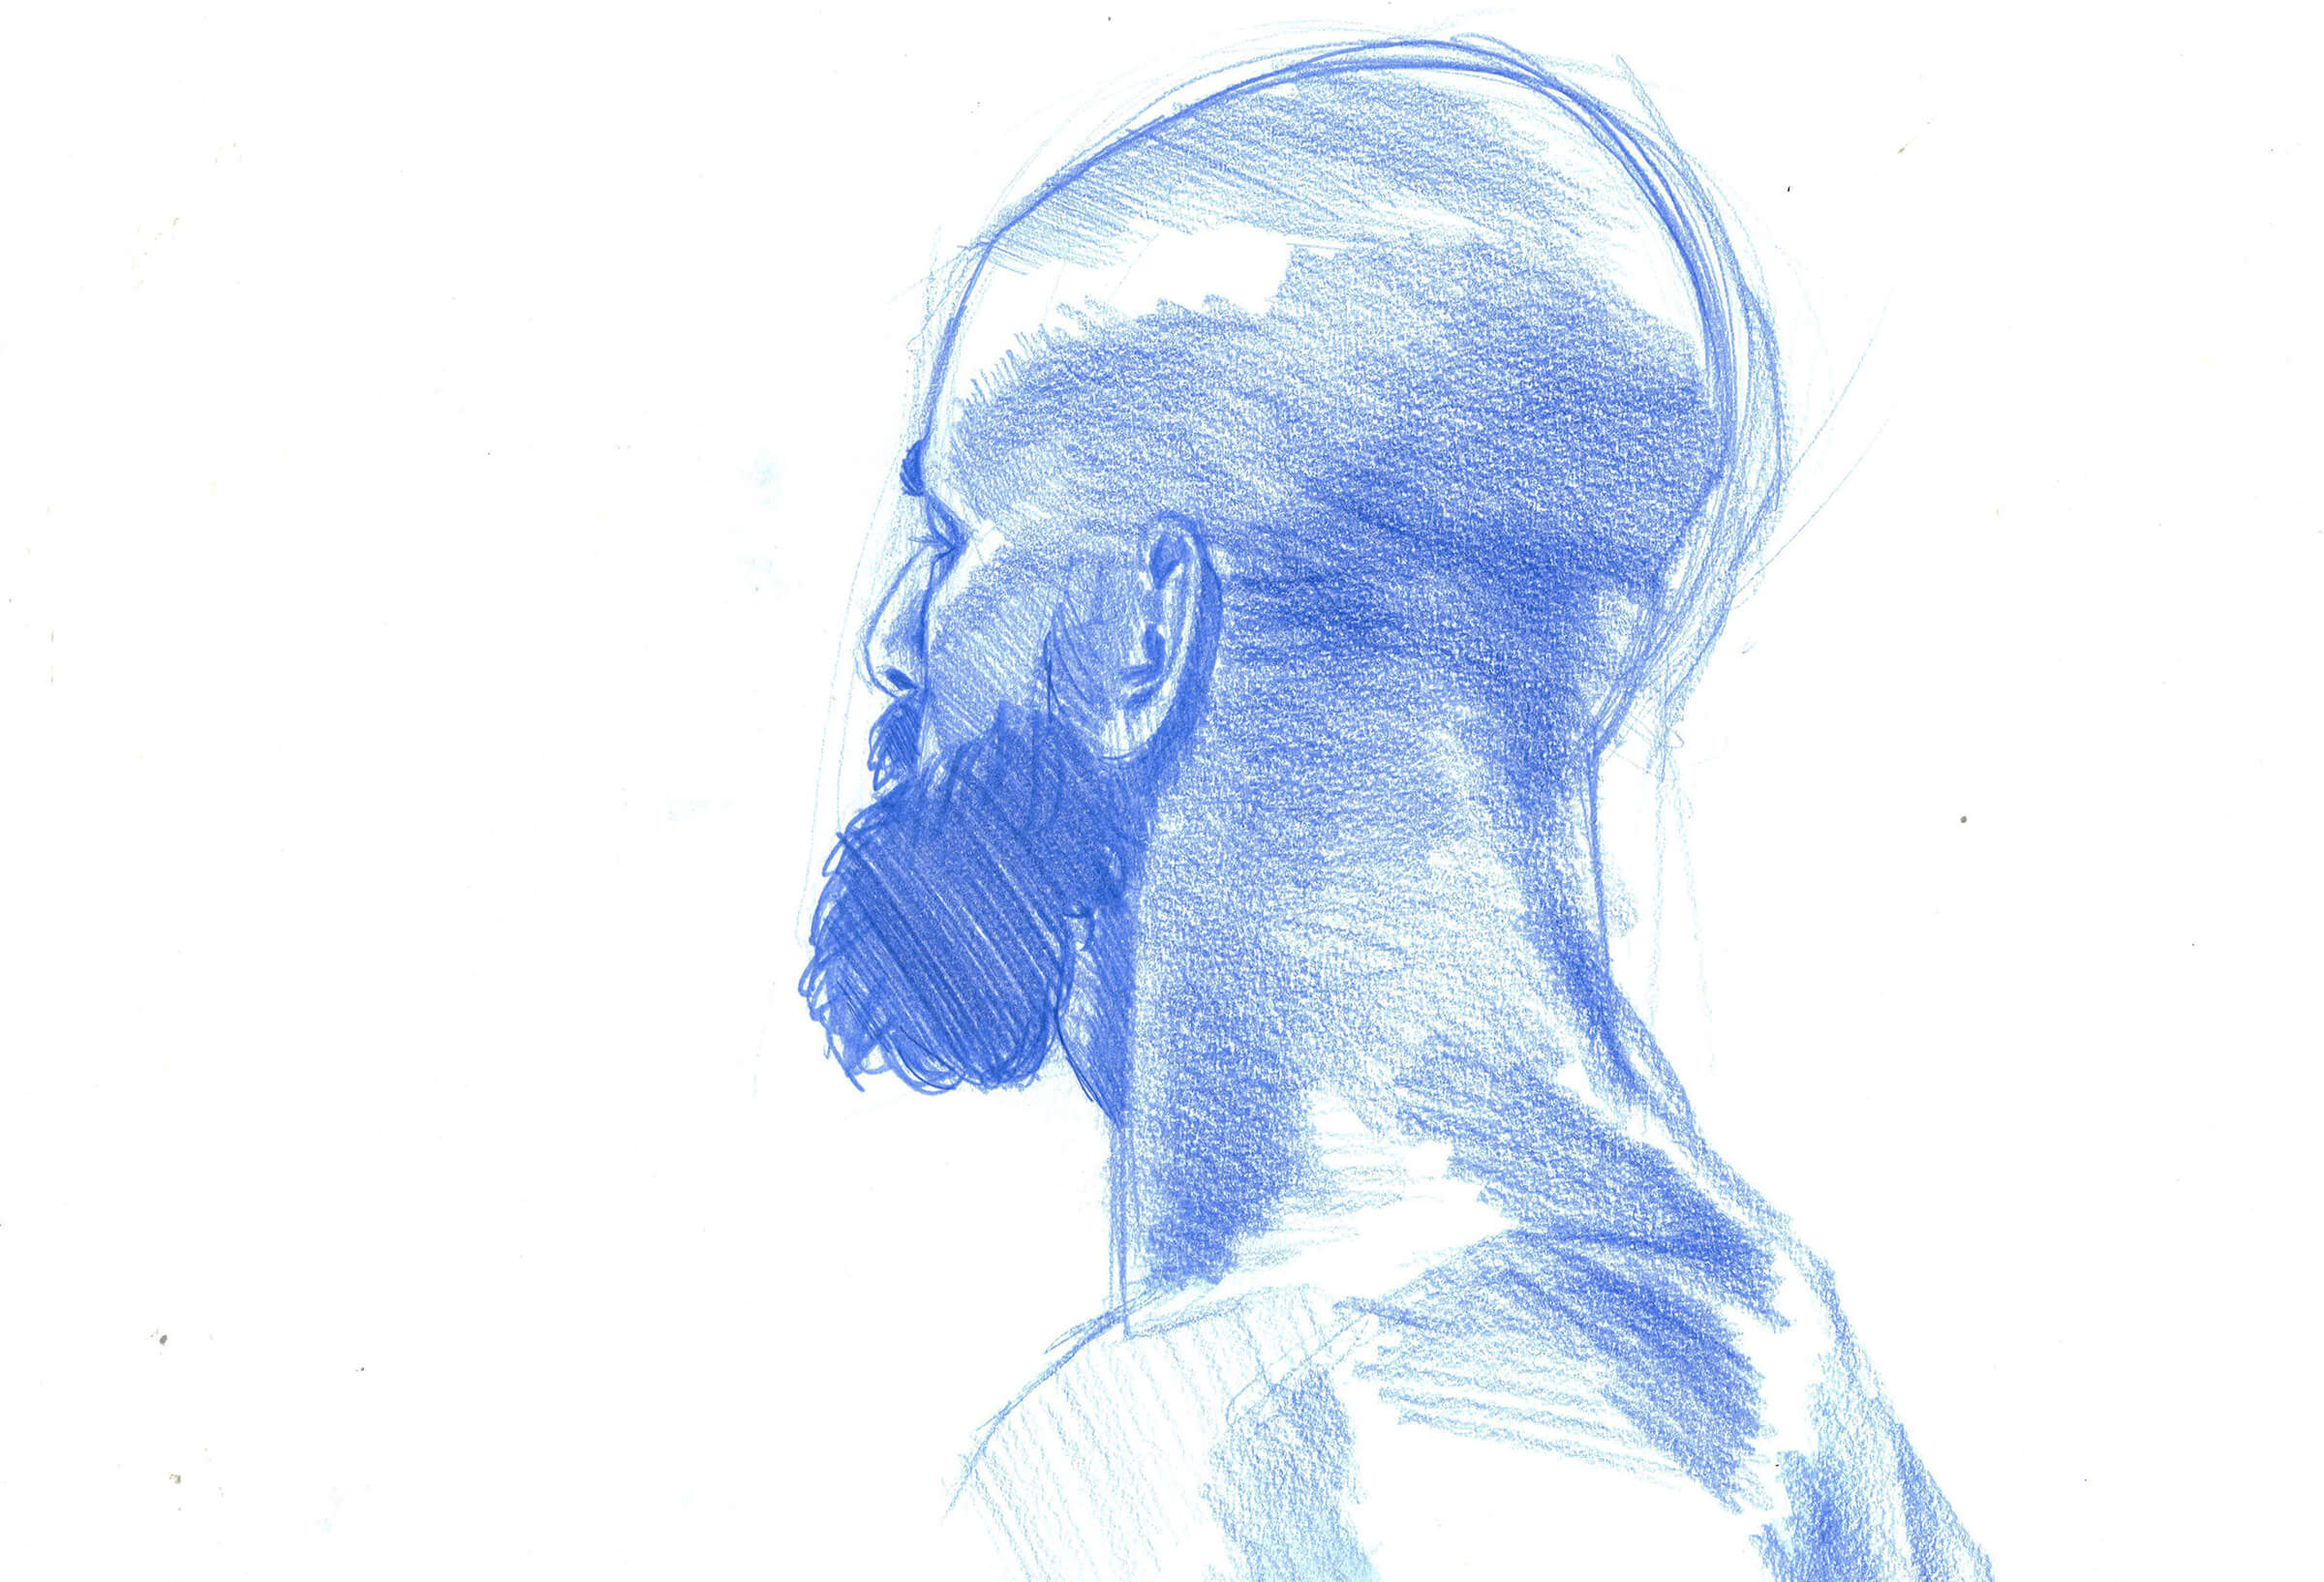 drawing of a bald man with a dark beard